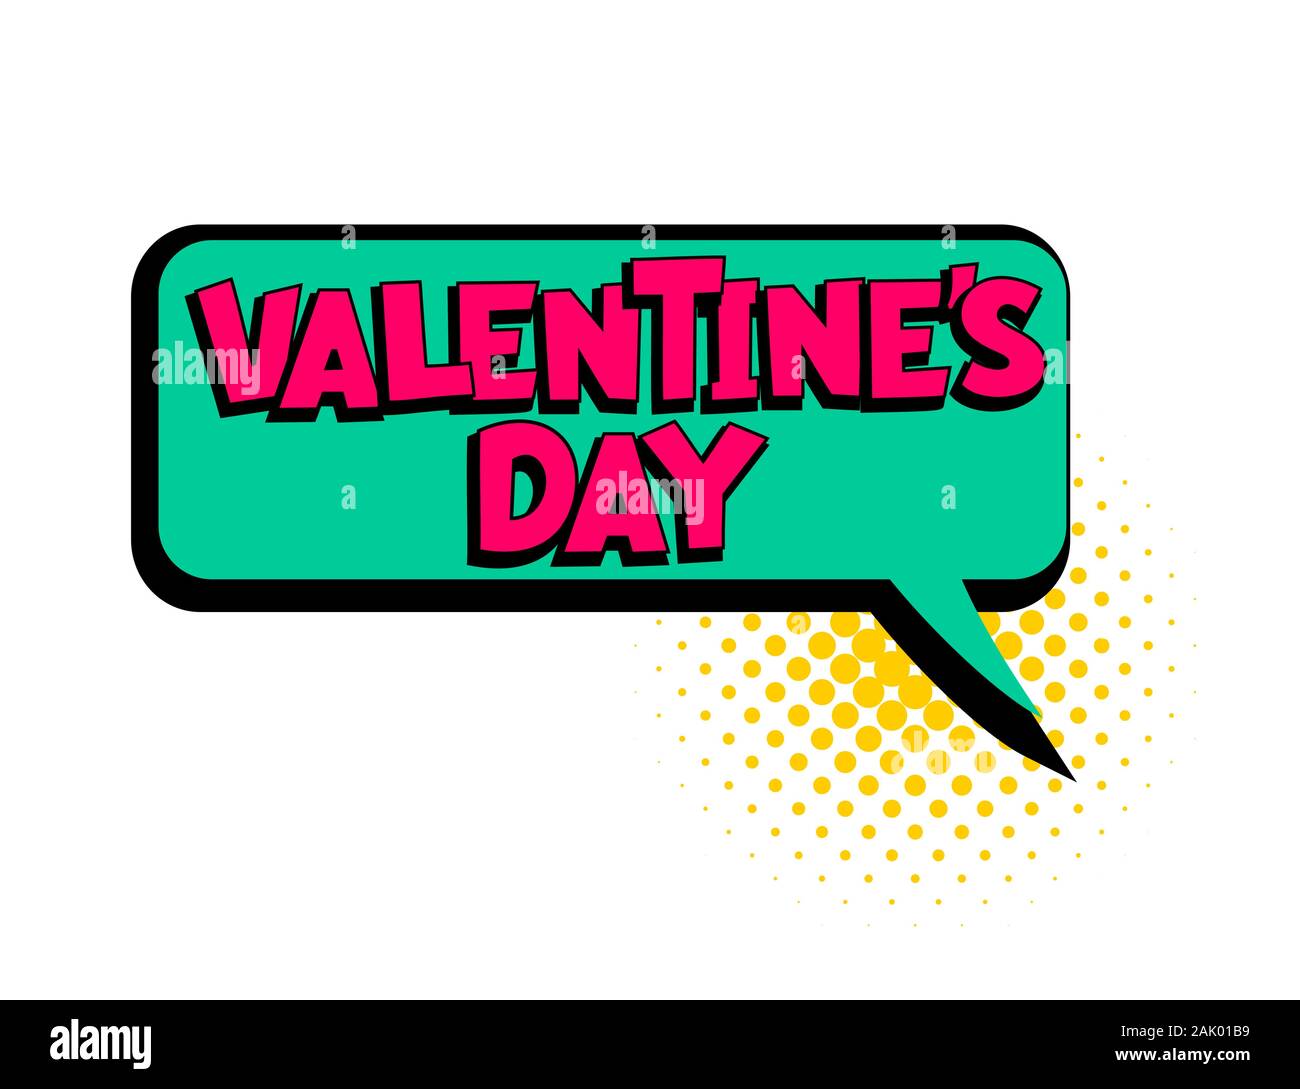 Valentines day speech bubble pop art comic text Stock Vector Image ...